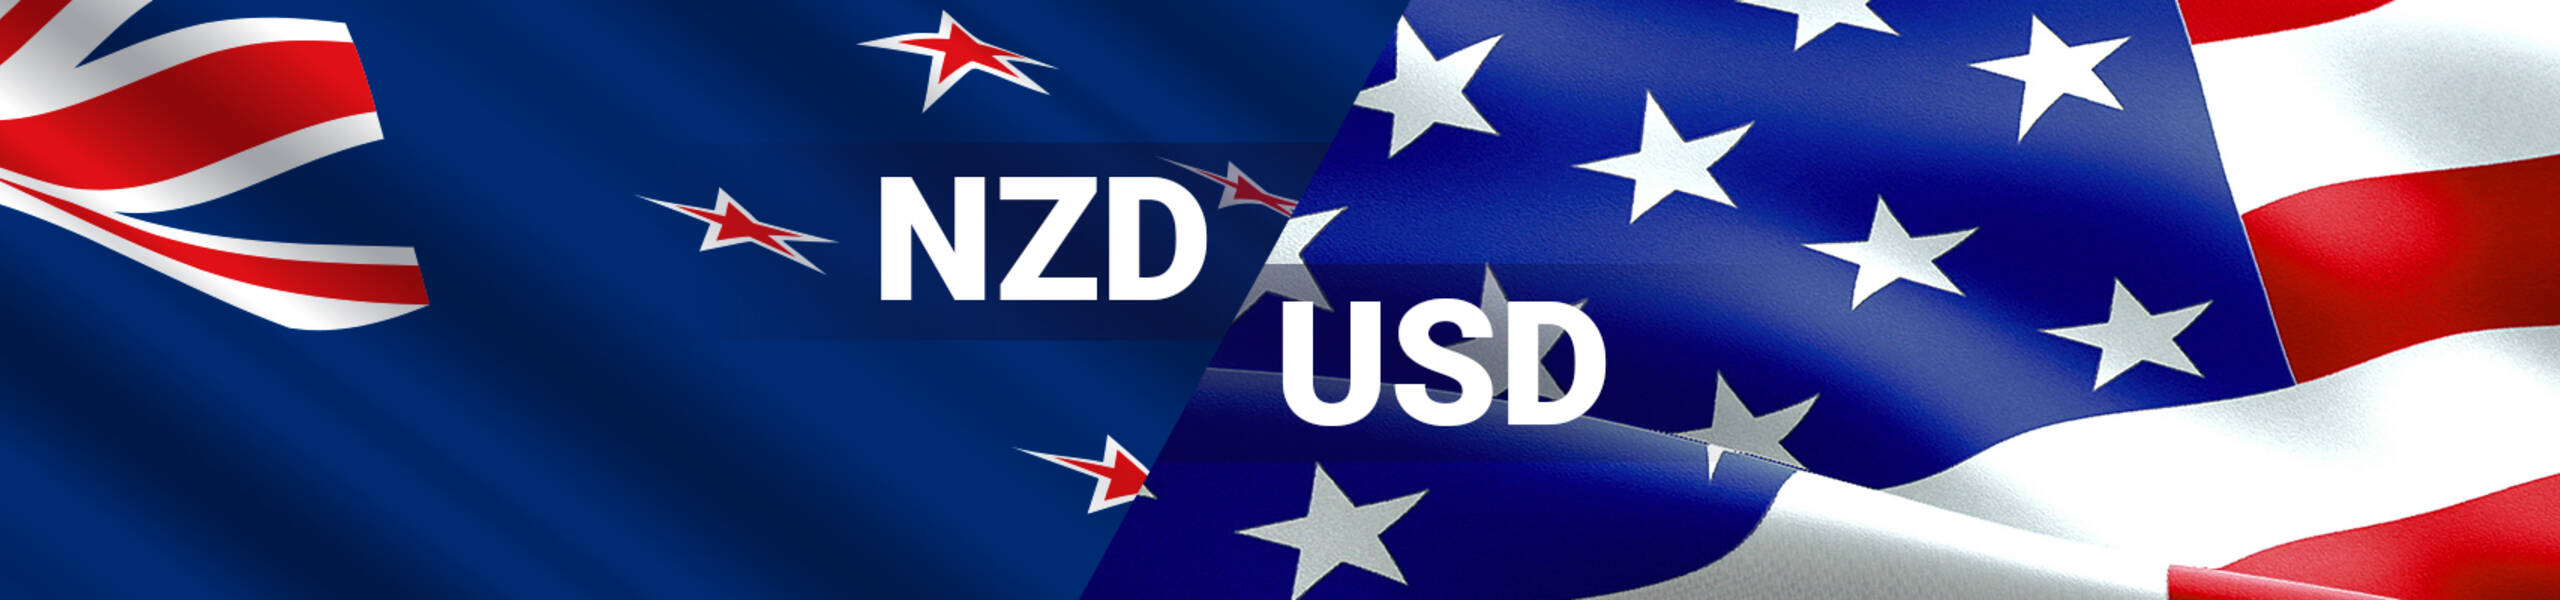 NZD/USD:  akankah kiwi kembali ke bears?